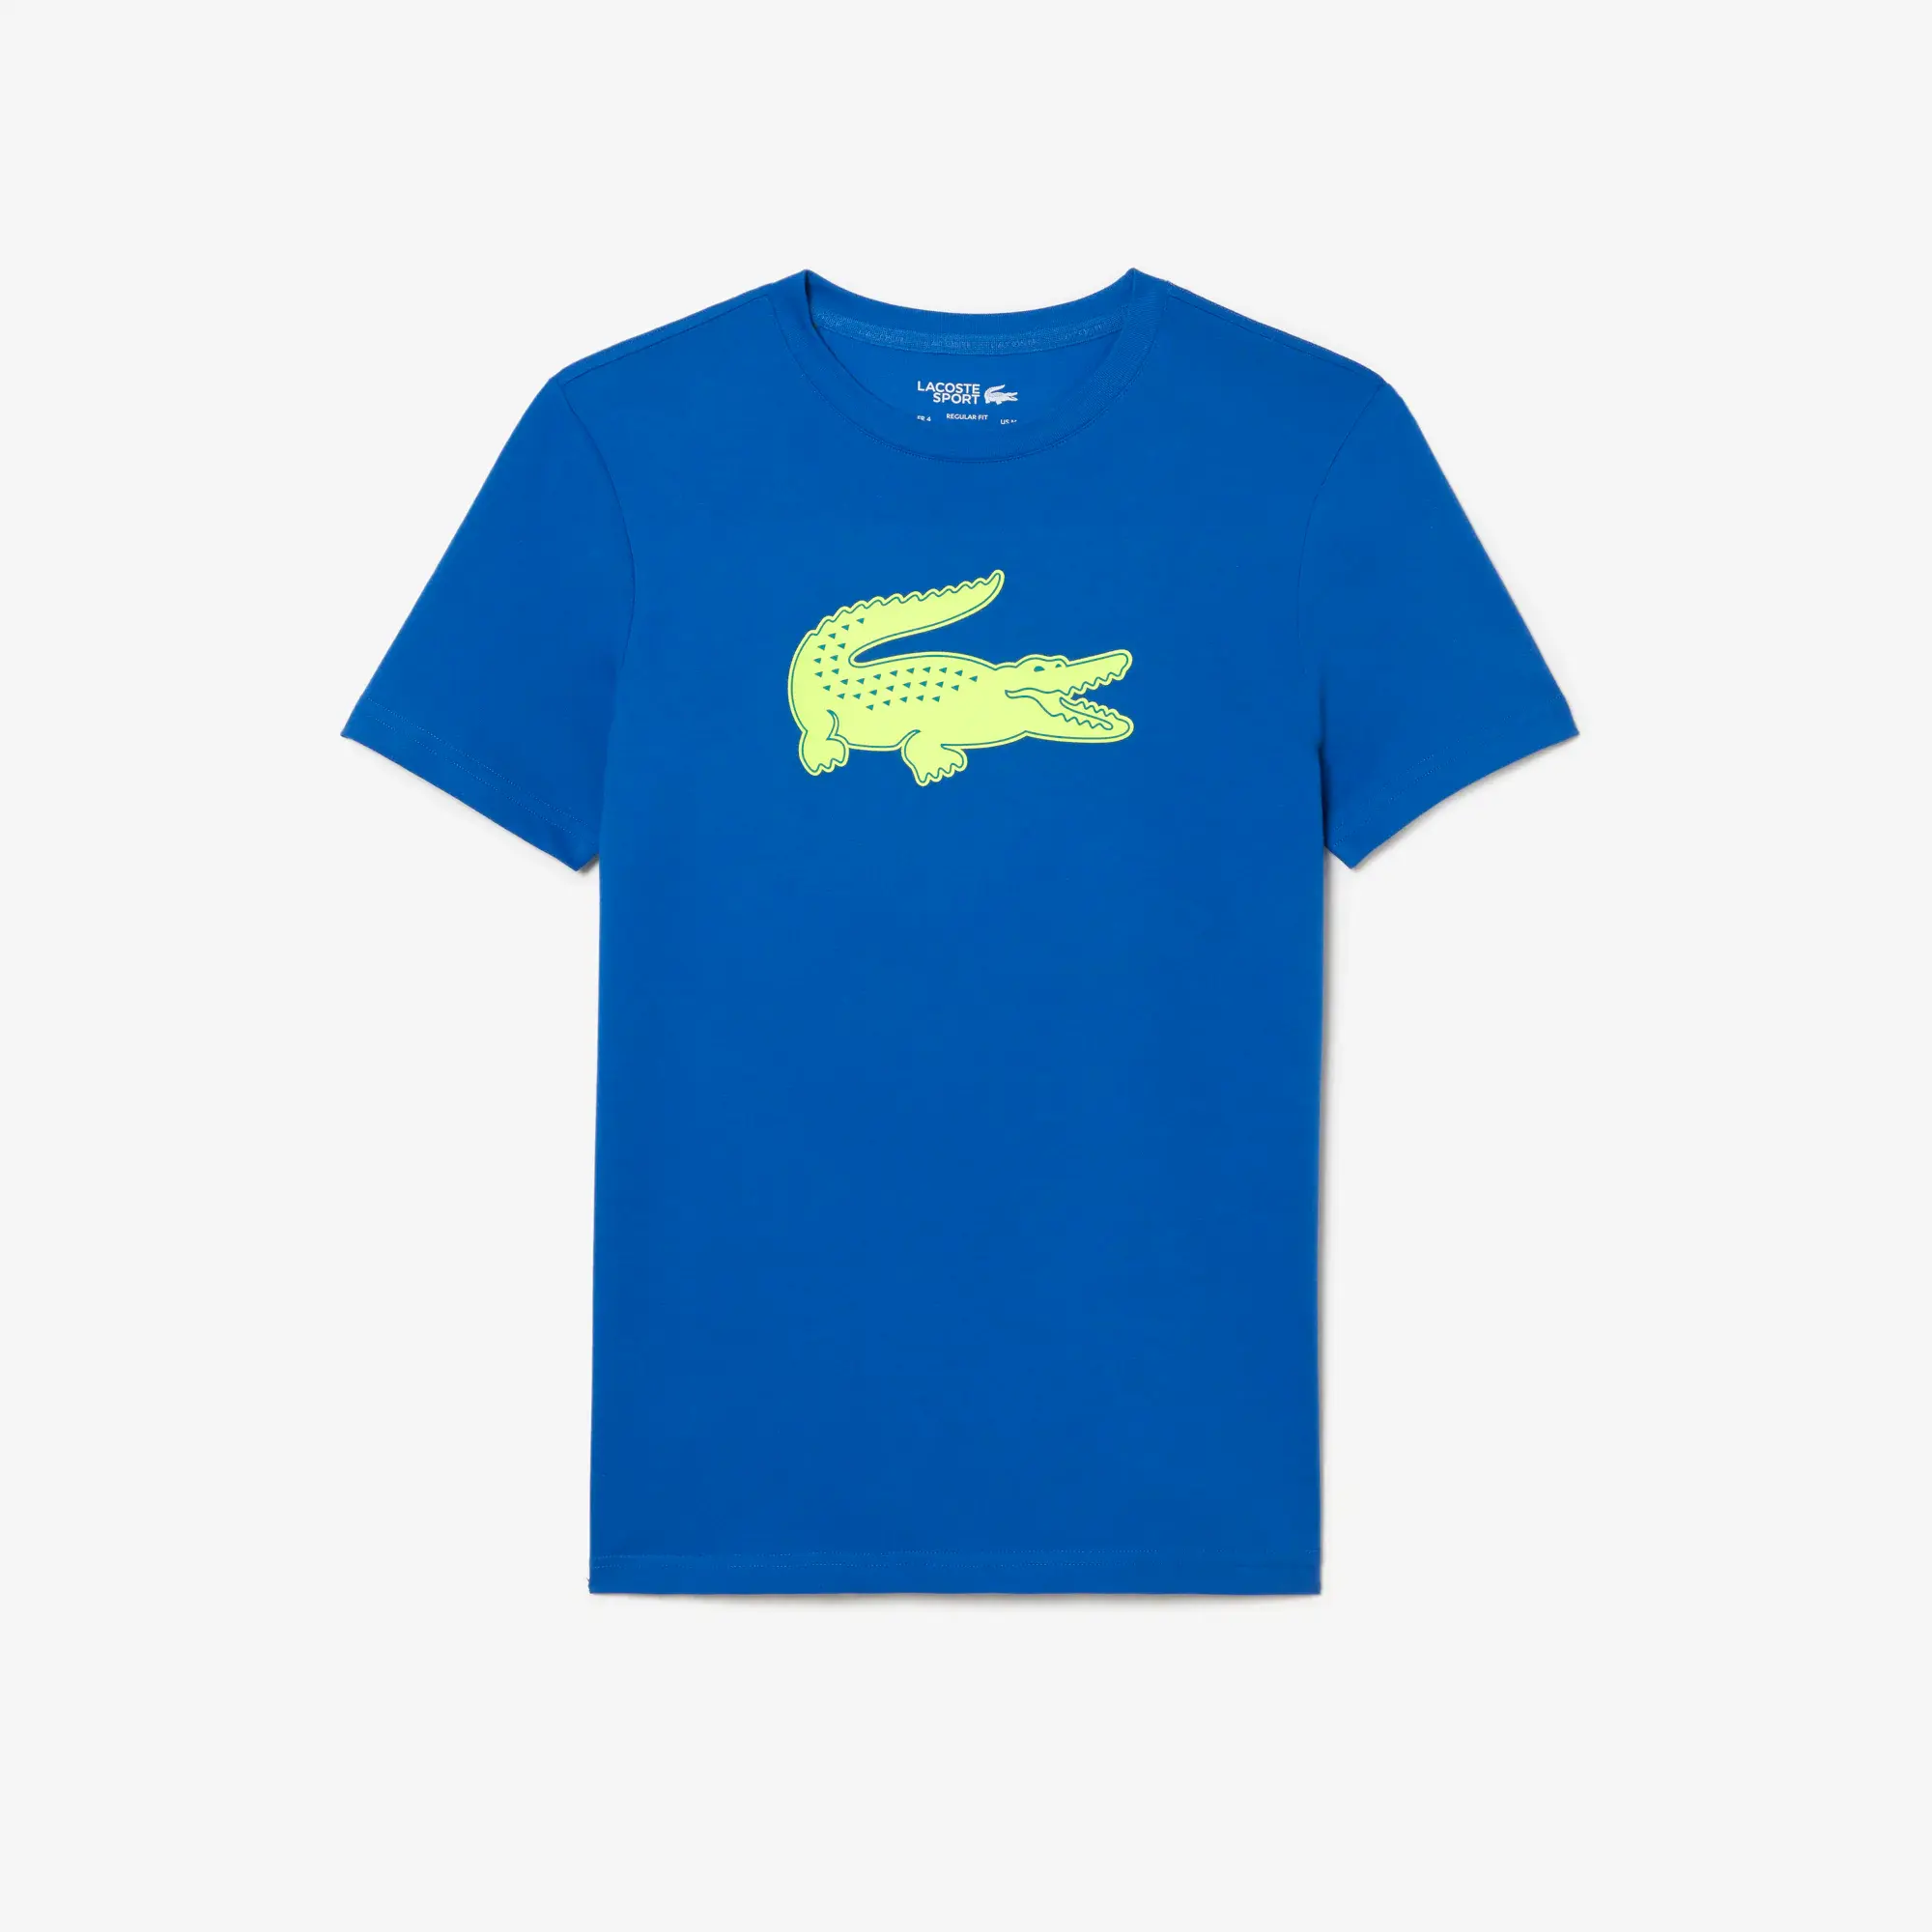 Lacoste Men's SPORT 3D Print Croc Jersey T-Shirt. 2